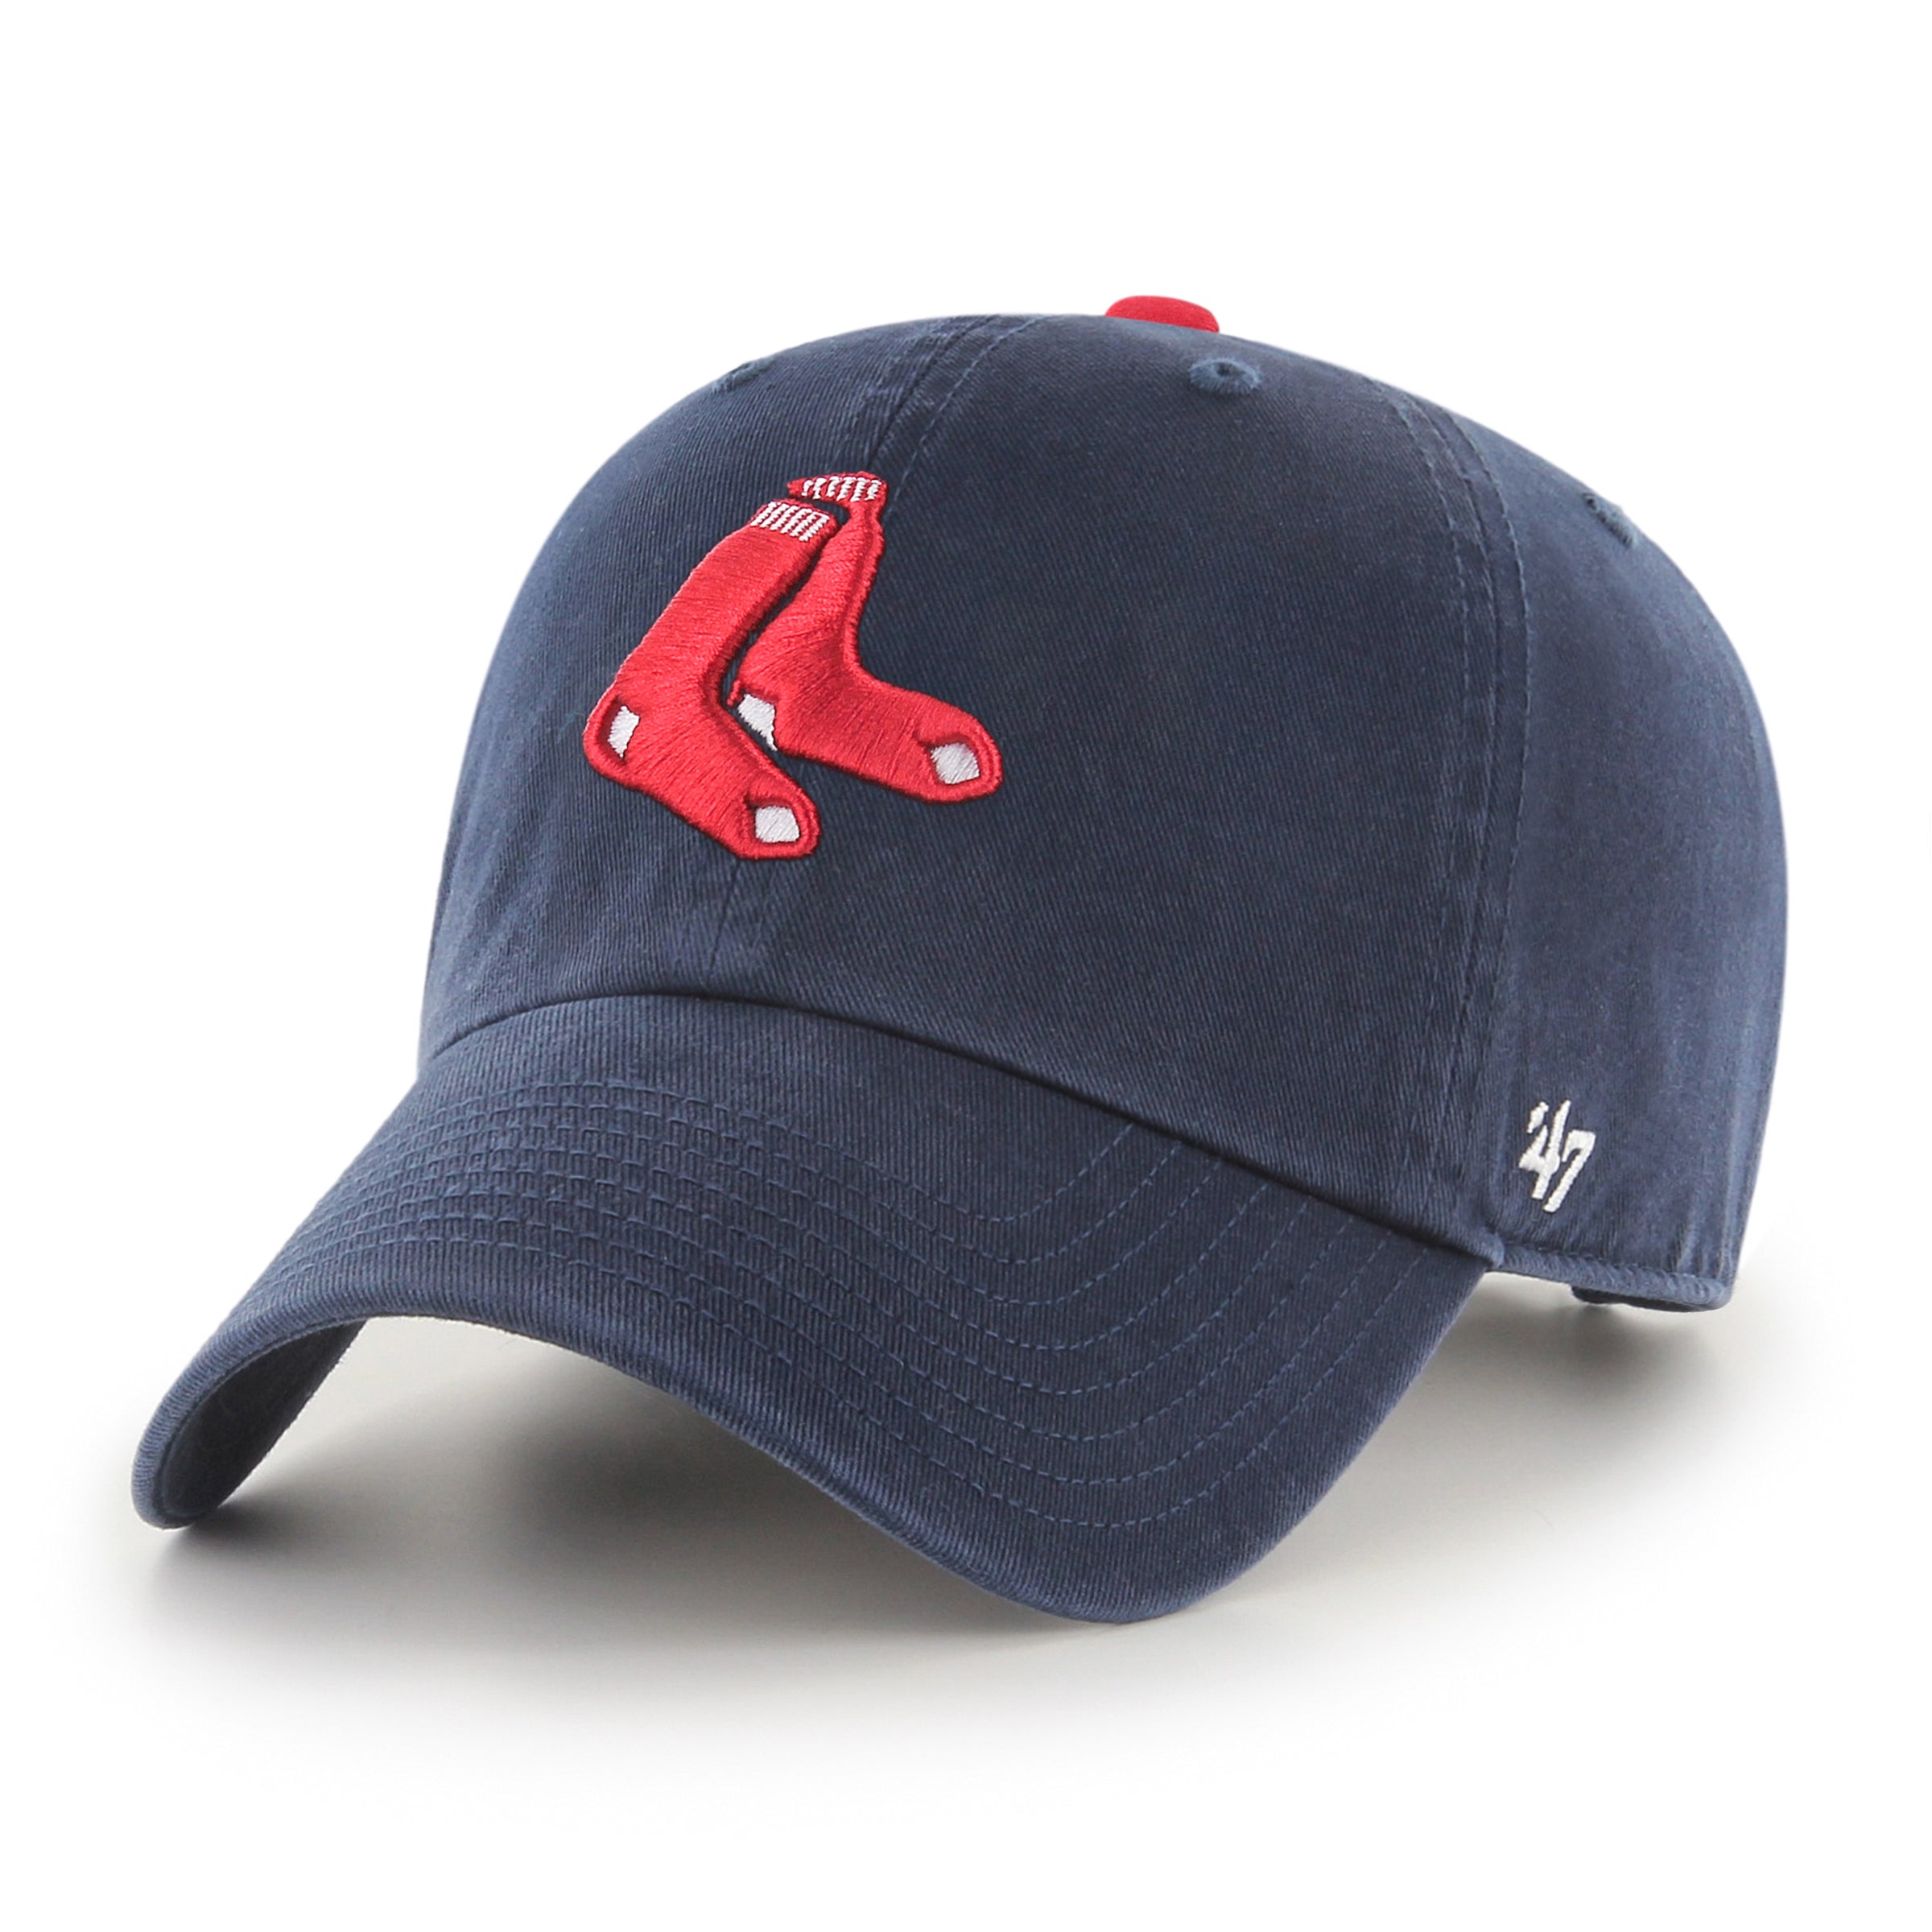 Boston Red Sox Gear, Red Sox Jerseys, Store, Boston Pro Shop